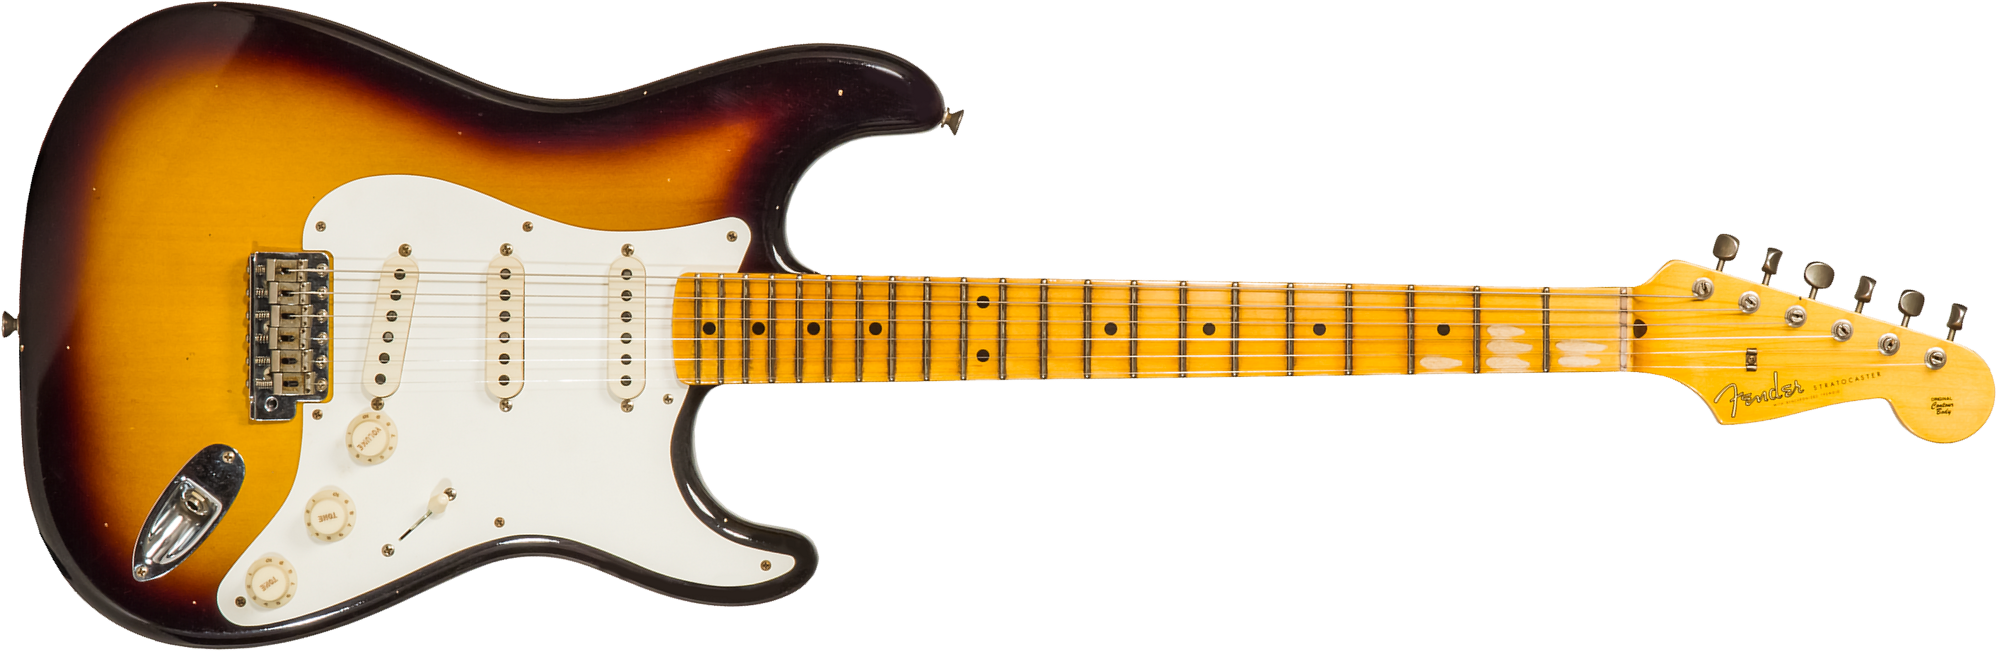 Fender Custom Shop Strat 1956 3s Trem Mn #cz571884 - Journeyman Relic Aged 2-color Sunburst - E-Gitarre in Str-Form - Main picture